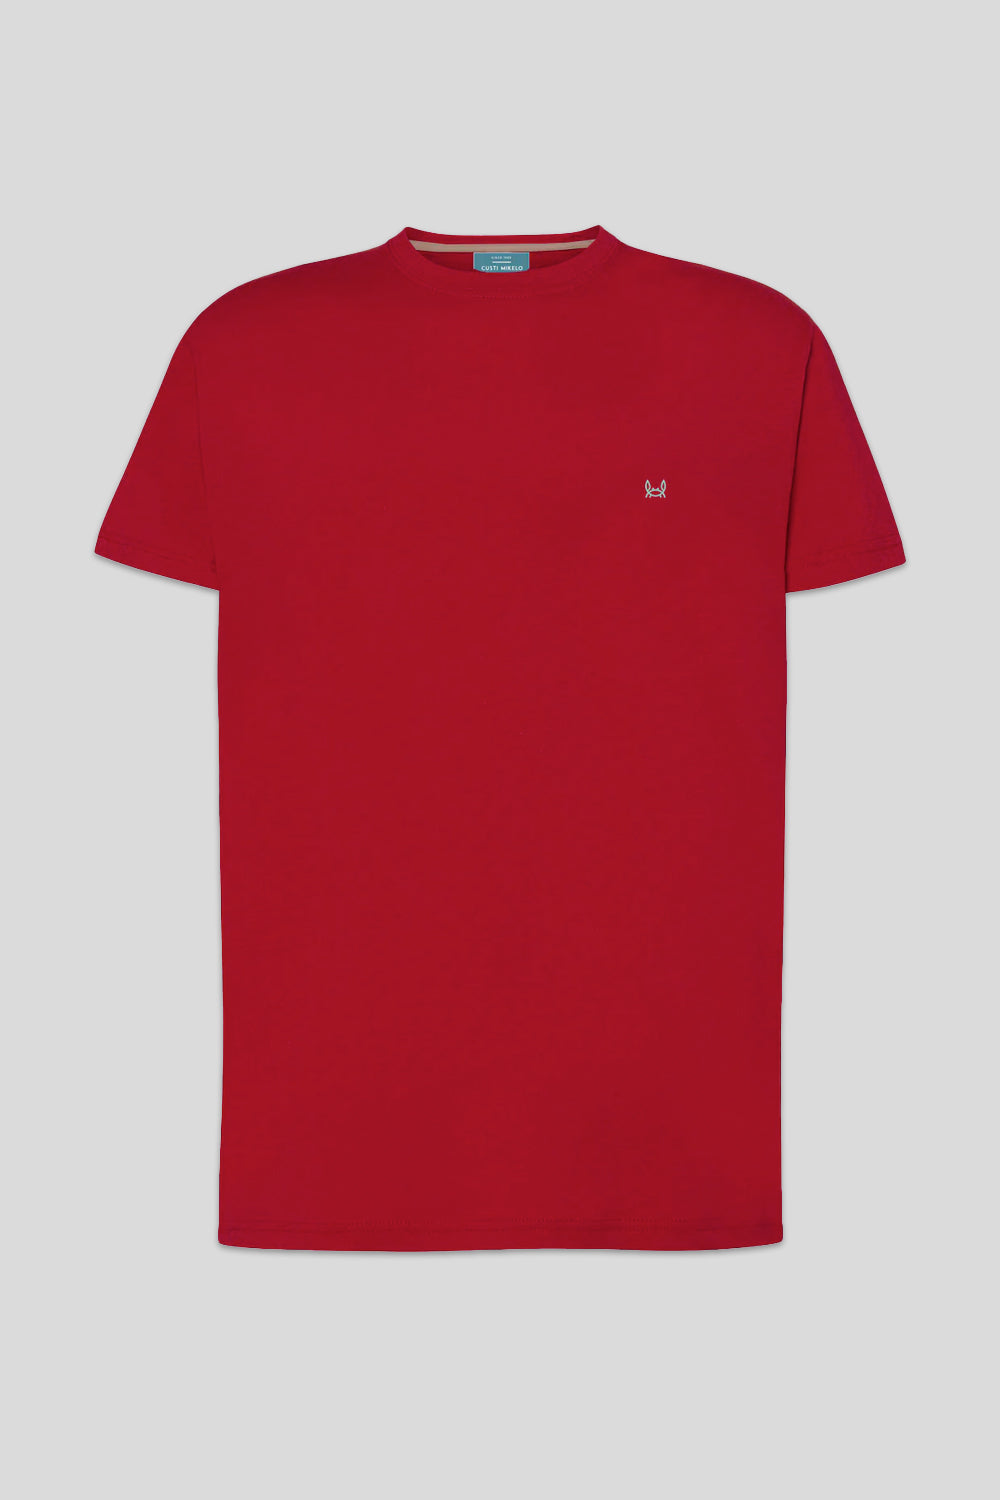 Camiseta básica roja